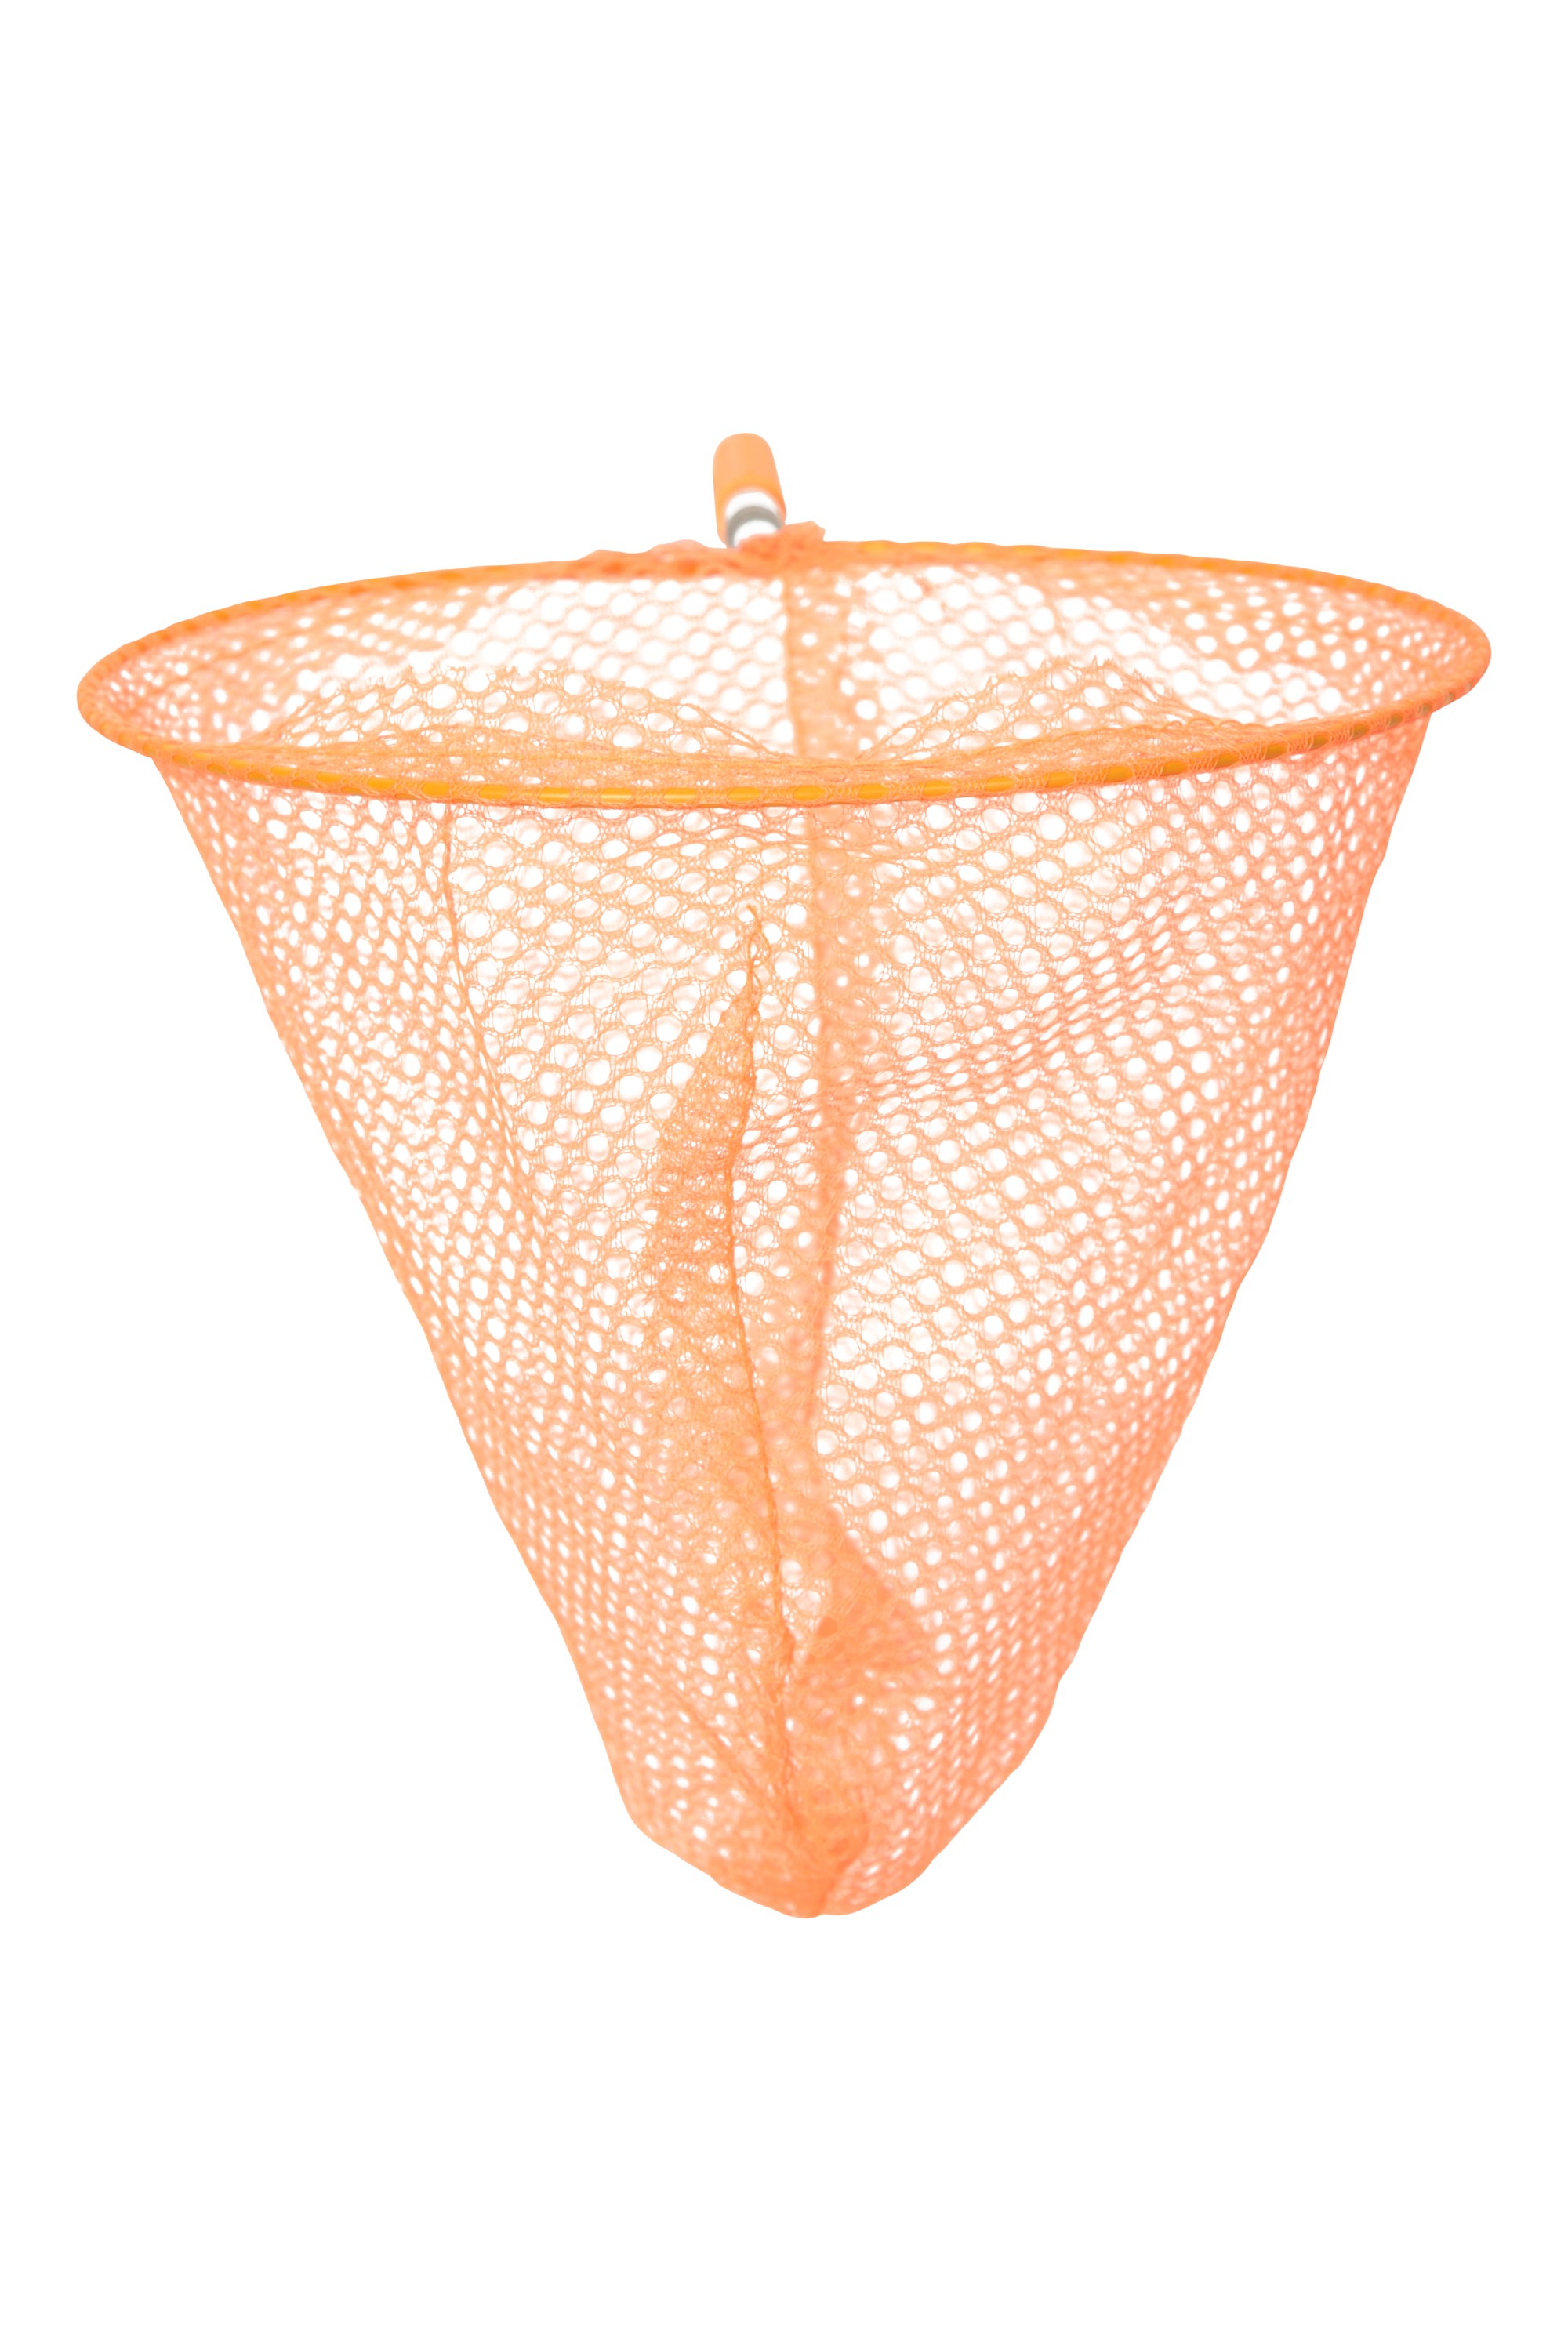 Extendable Long Handle Fishing Net